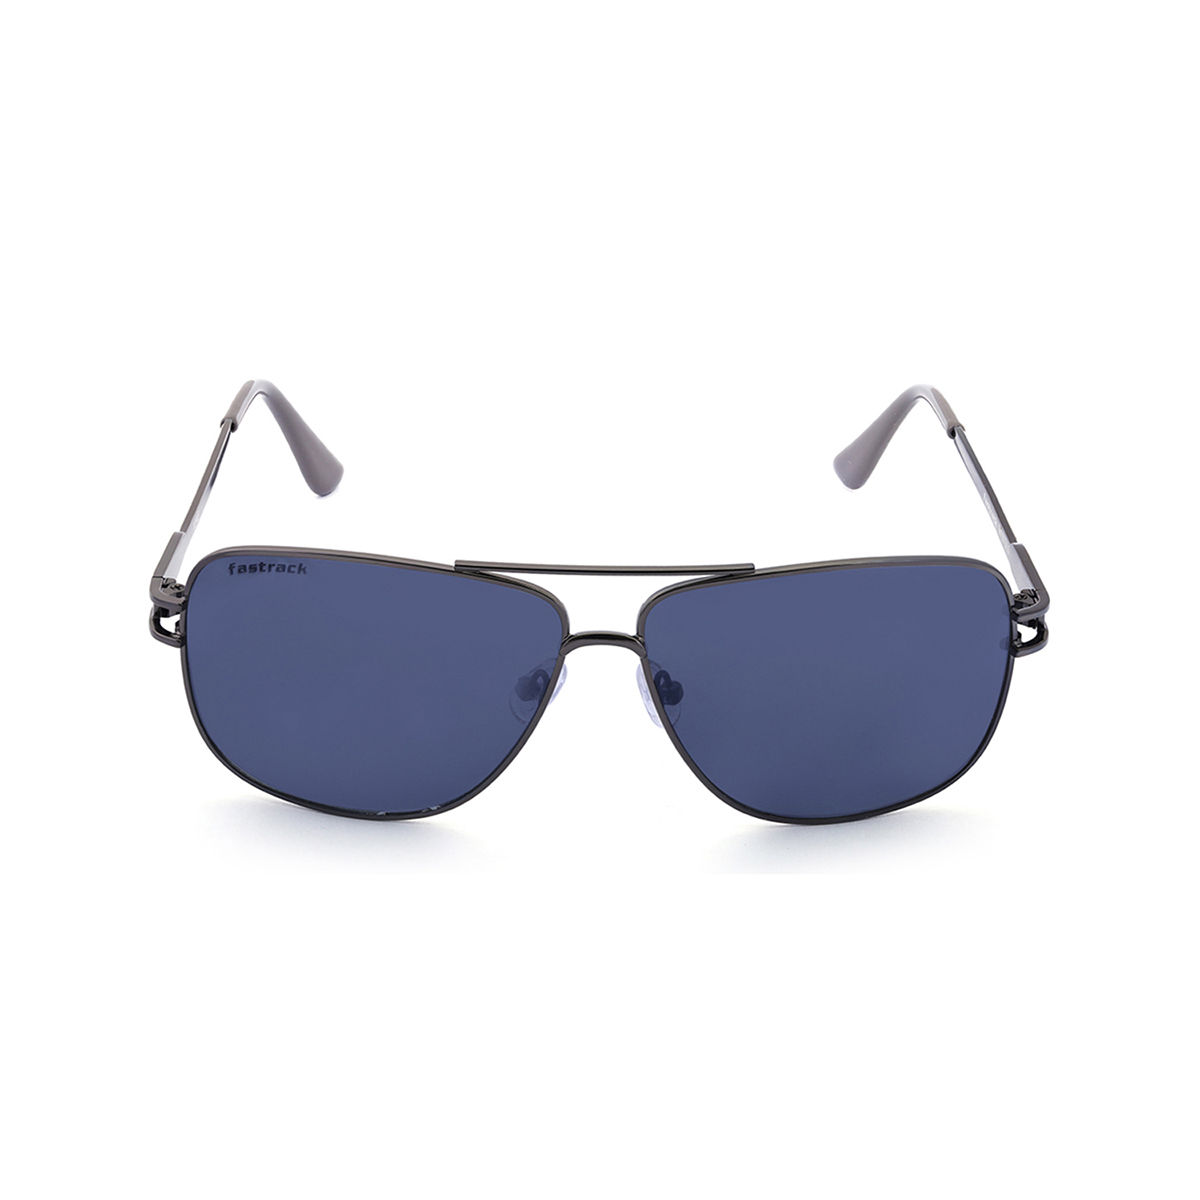 Buy fastrack Women Rectangle Sunglasses [P289BK1F] Online - Best Price  fastrack Women Rectangle Sunglasses [P289BK1F] - Justdial Shop Online.